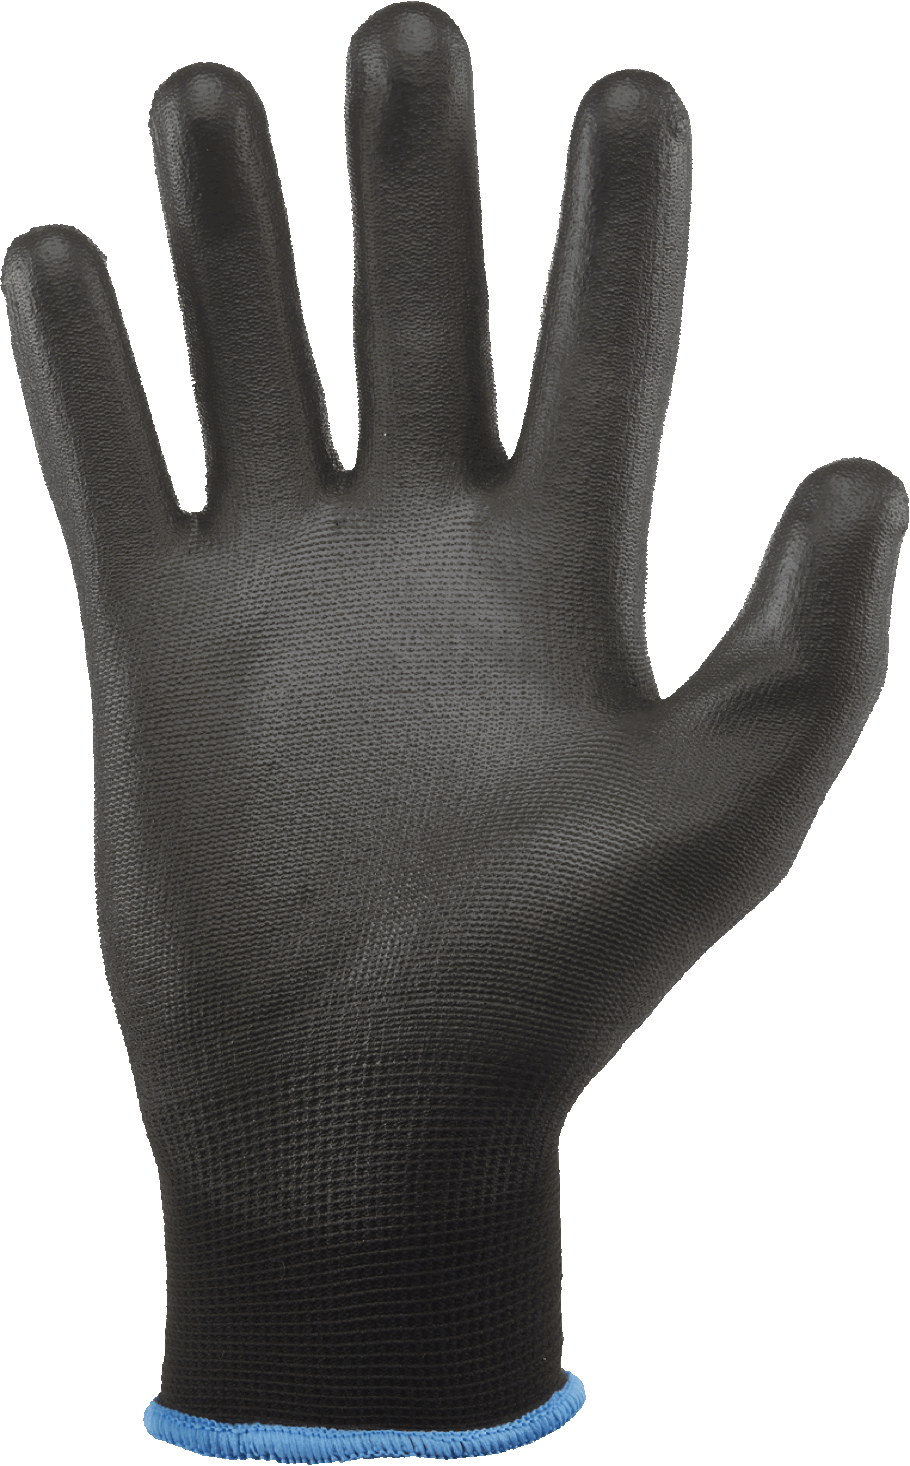 GORILLA GRIP Small TRAX Extreme Grip Work Gloves 25485-054 - The